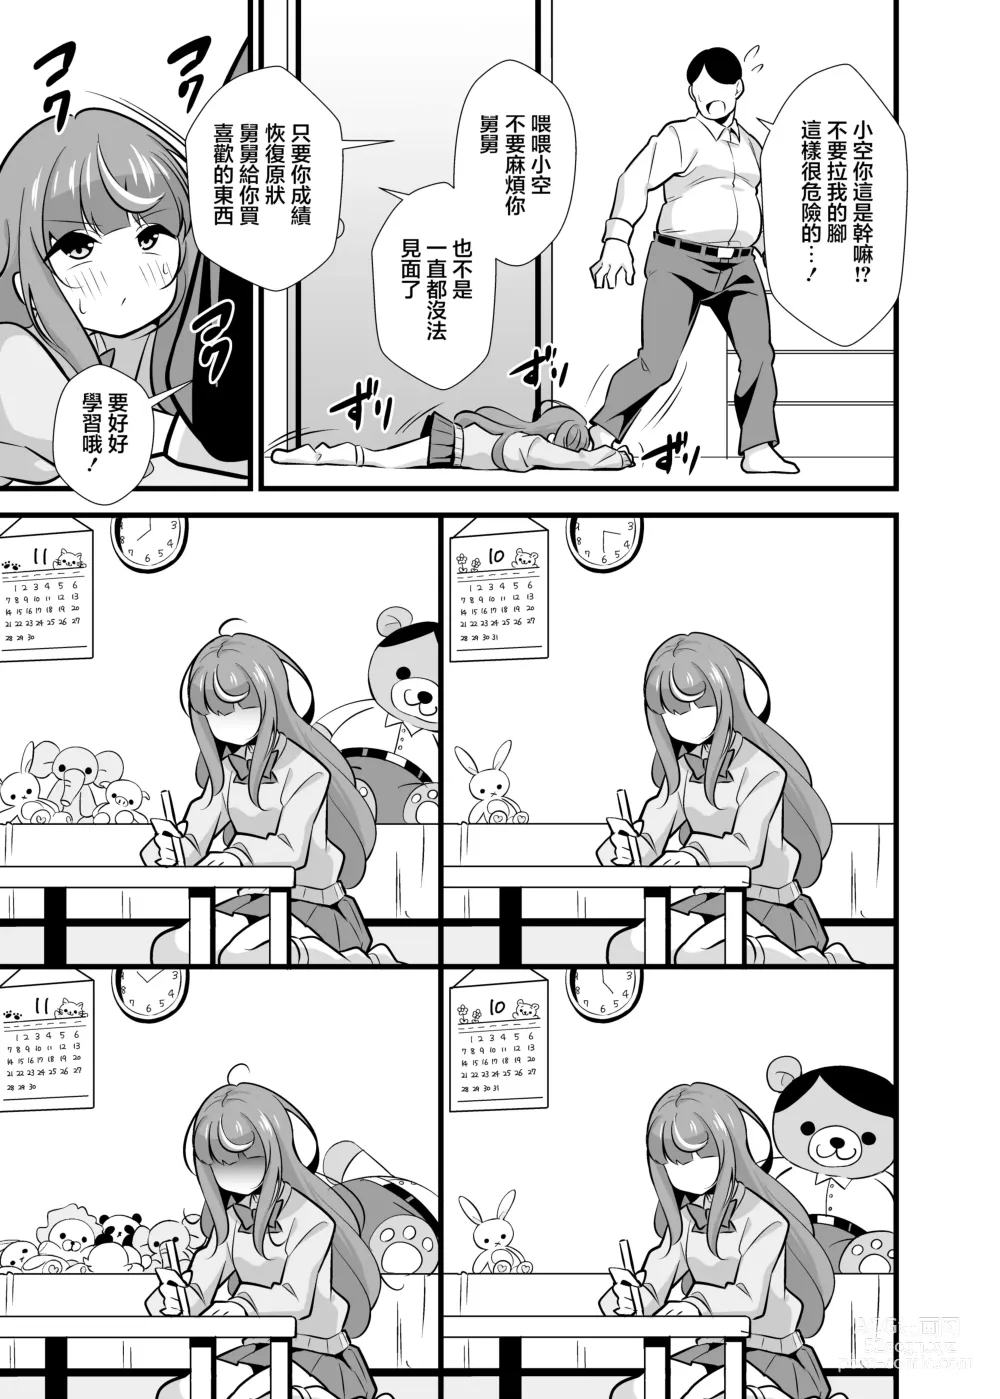 Page 4 of doujinshi 叔父催眠2 因為愛慕舅舅,被髮情期無法壓抑的姪女給瘋狂搾精的逆強姦♡